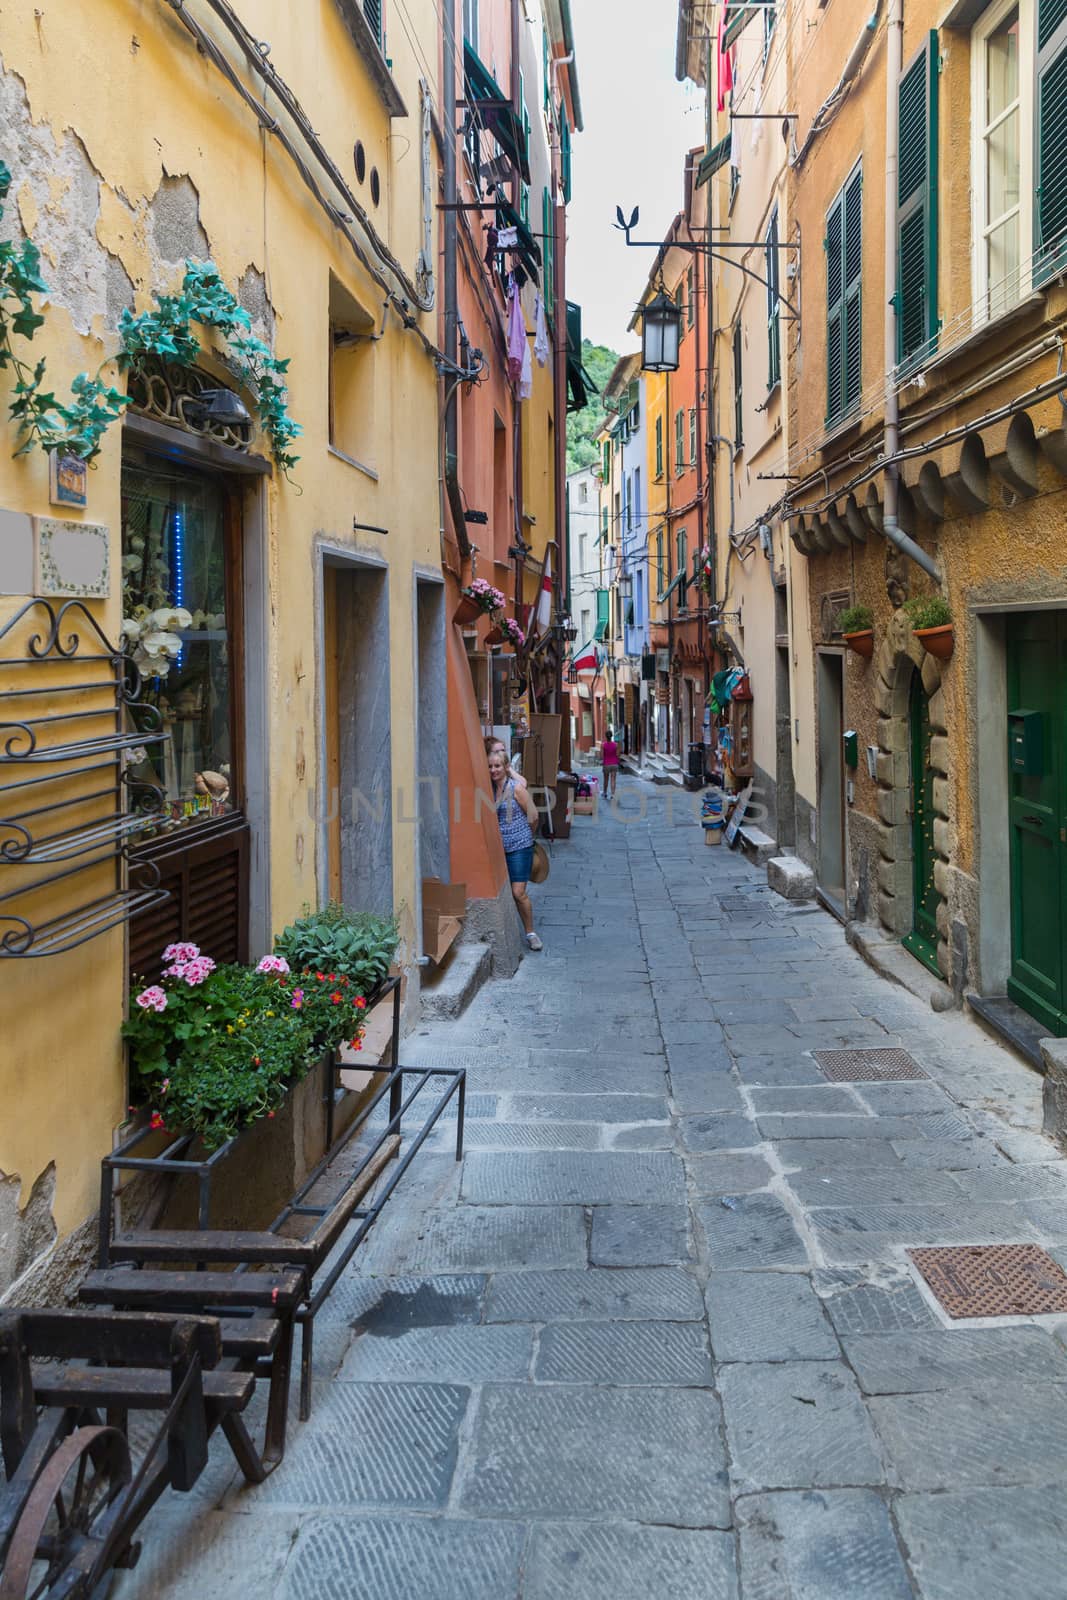 Street in Portovenere in the Ligurian region of Italy by chrisukphoto